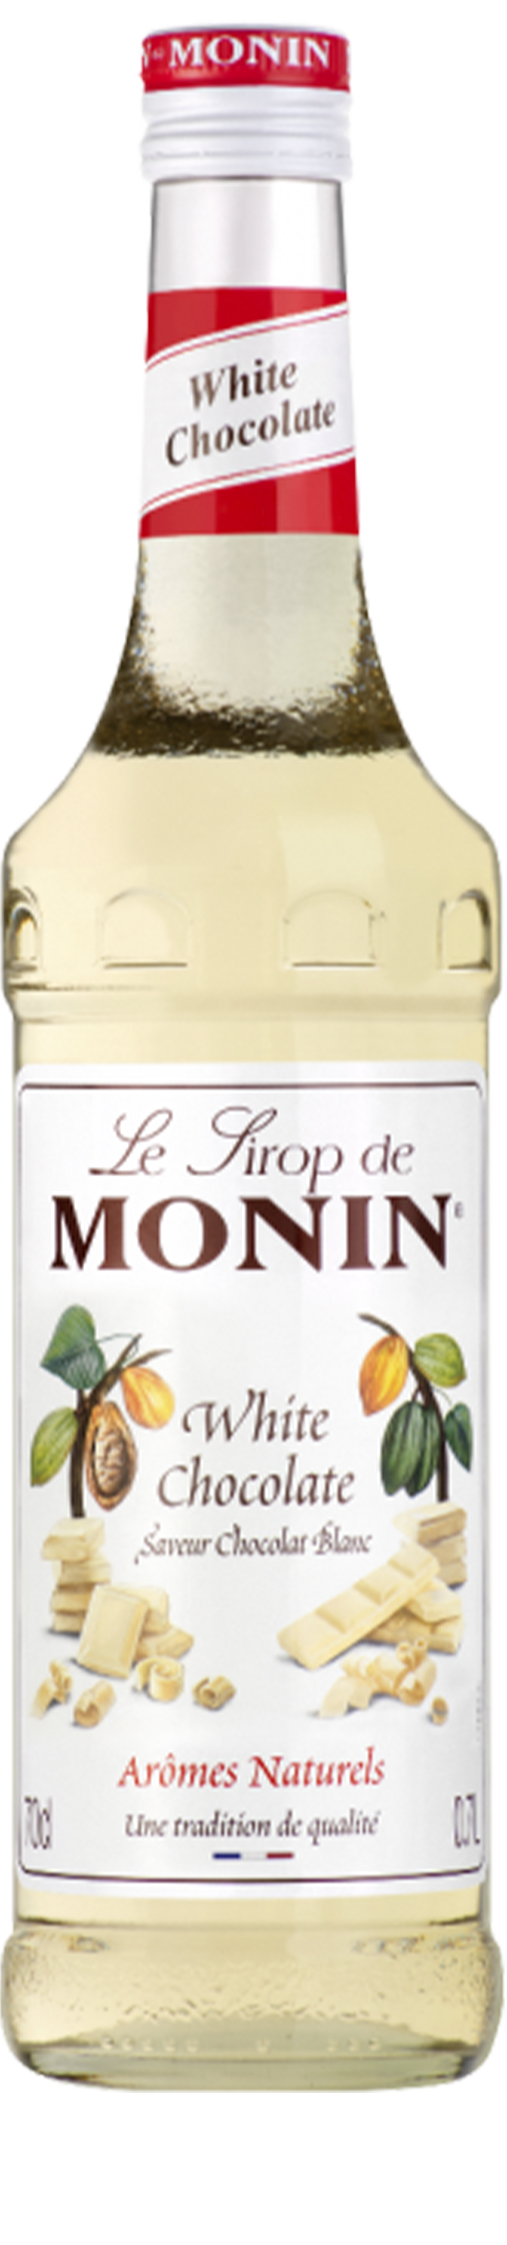 Le Sirop de MONIN White chocolate 0.7L